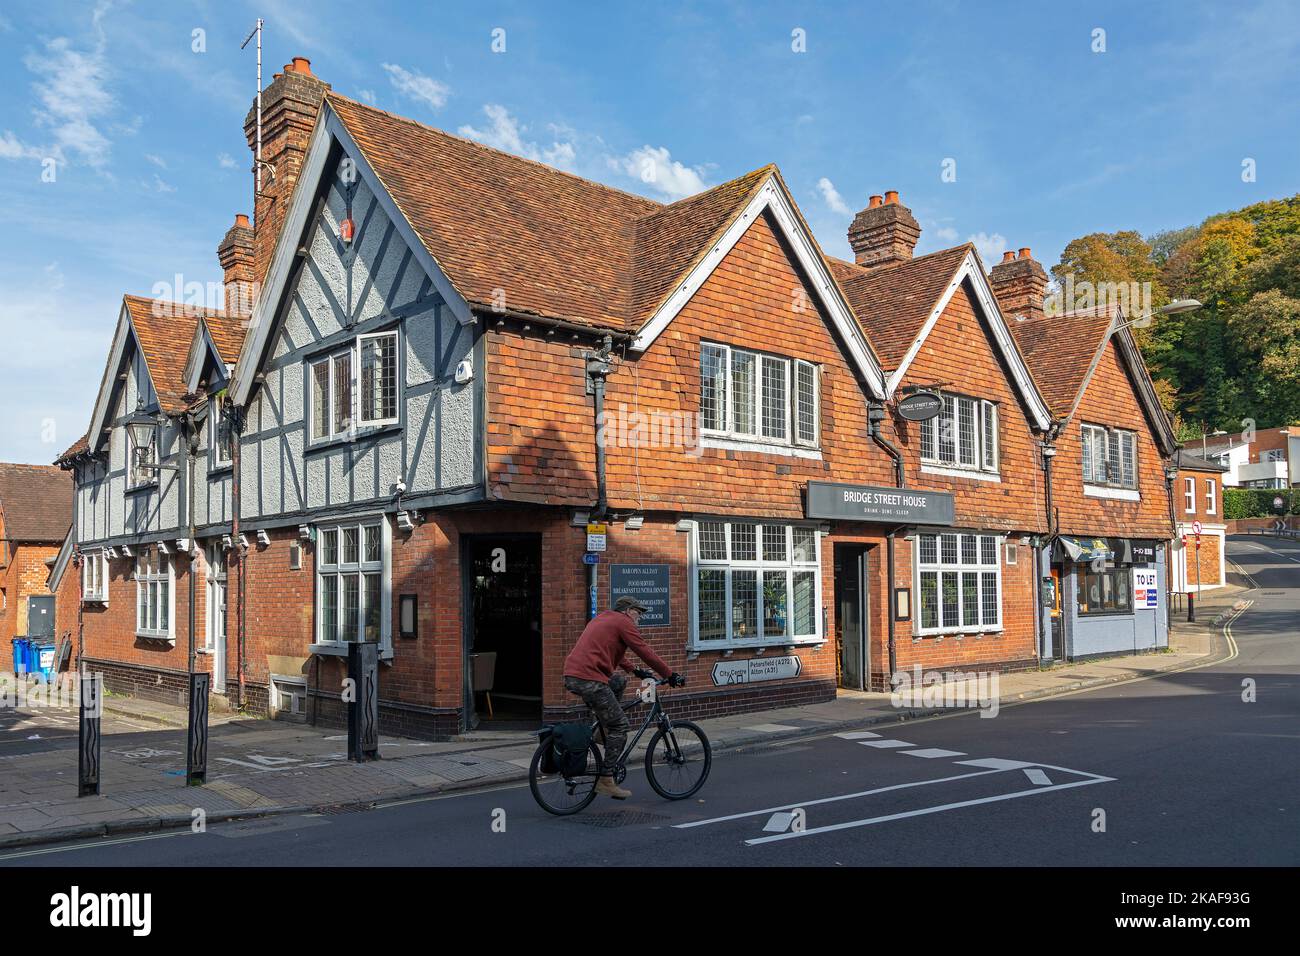 Bridge Street House, Winchester, Hampshire, England, Great Britain Stock Photo